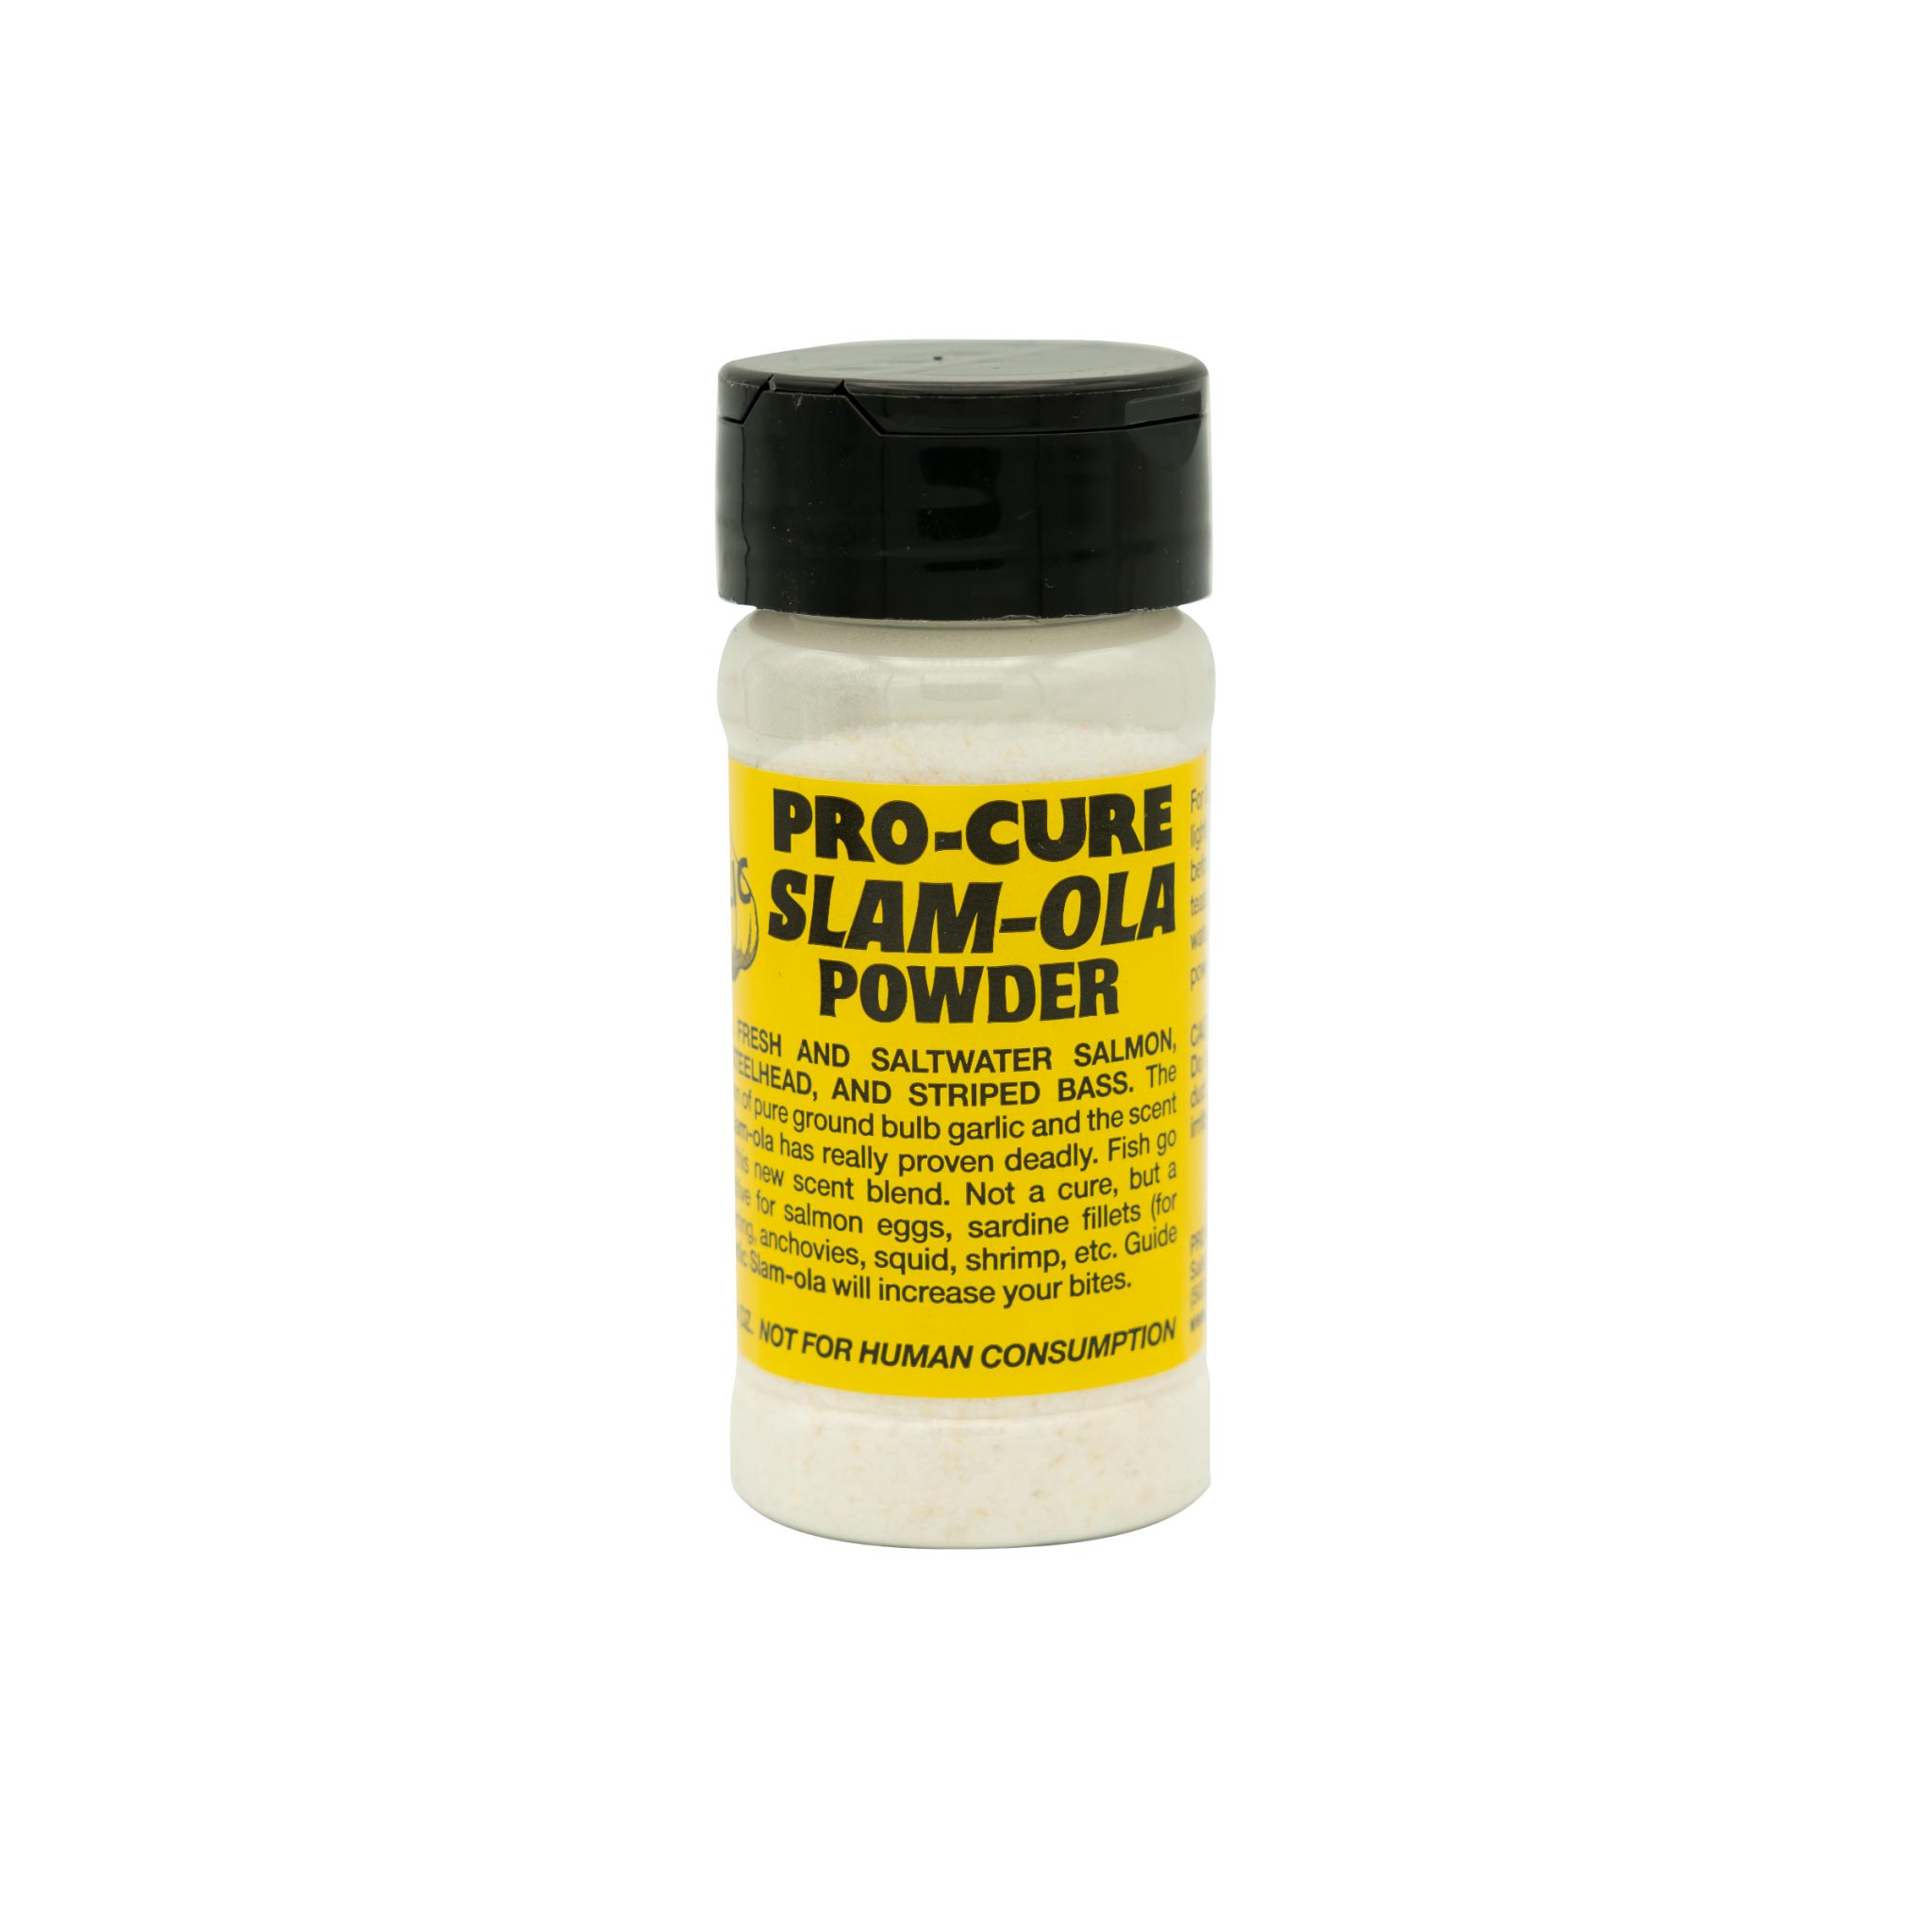 Pro-Cure Slam-Ola Powder, 4 Ounce, Regular Scent